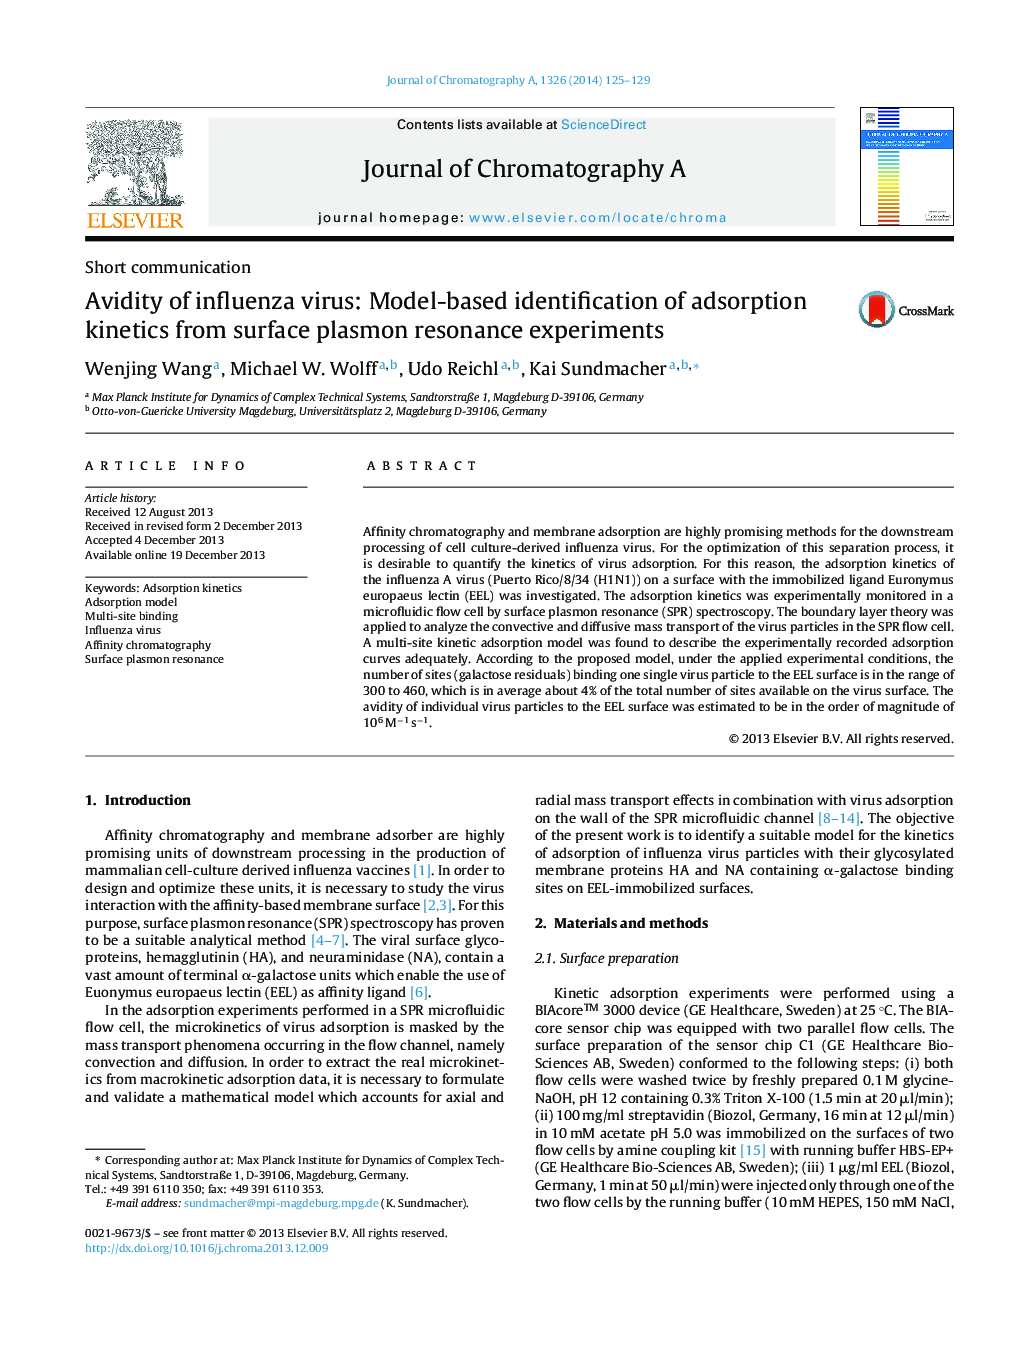 Avidity of influenza virus: Model-based identification of adsorption kinetics from surface plasmon resonance experiments